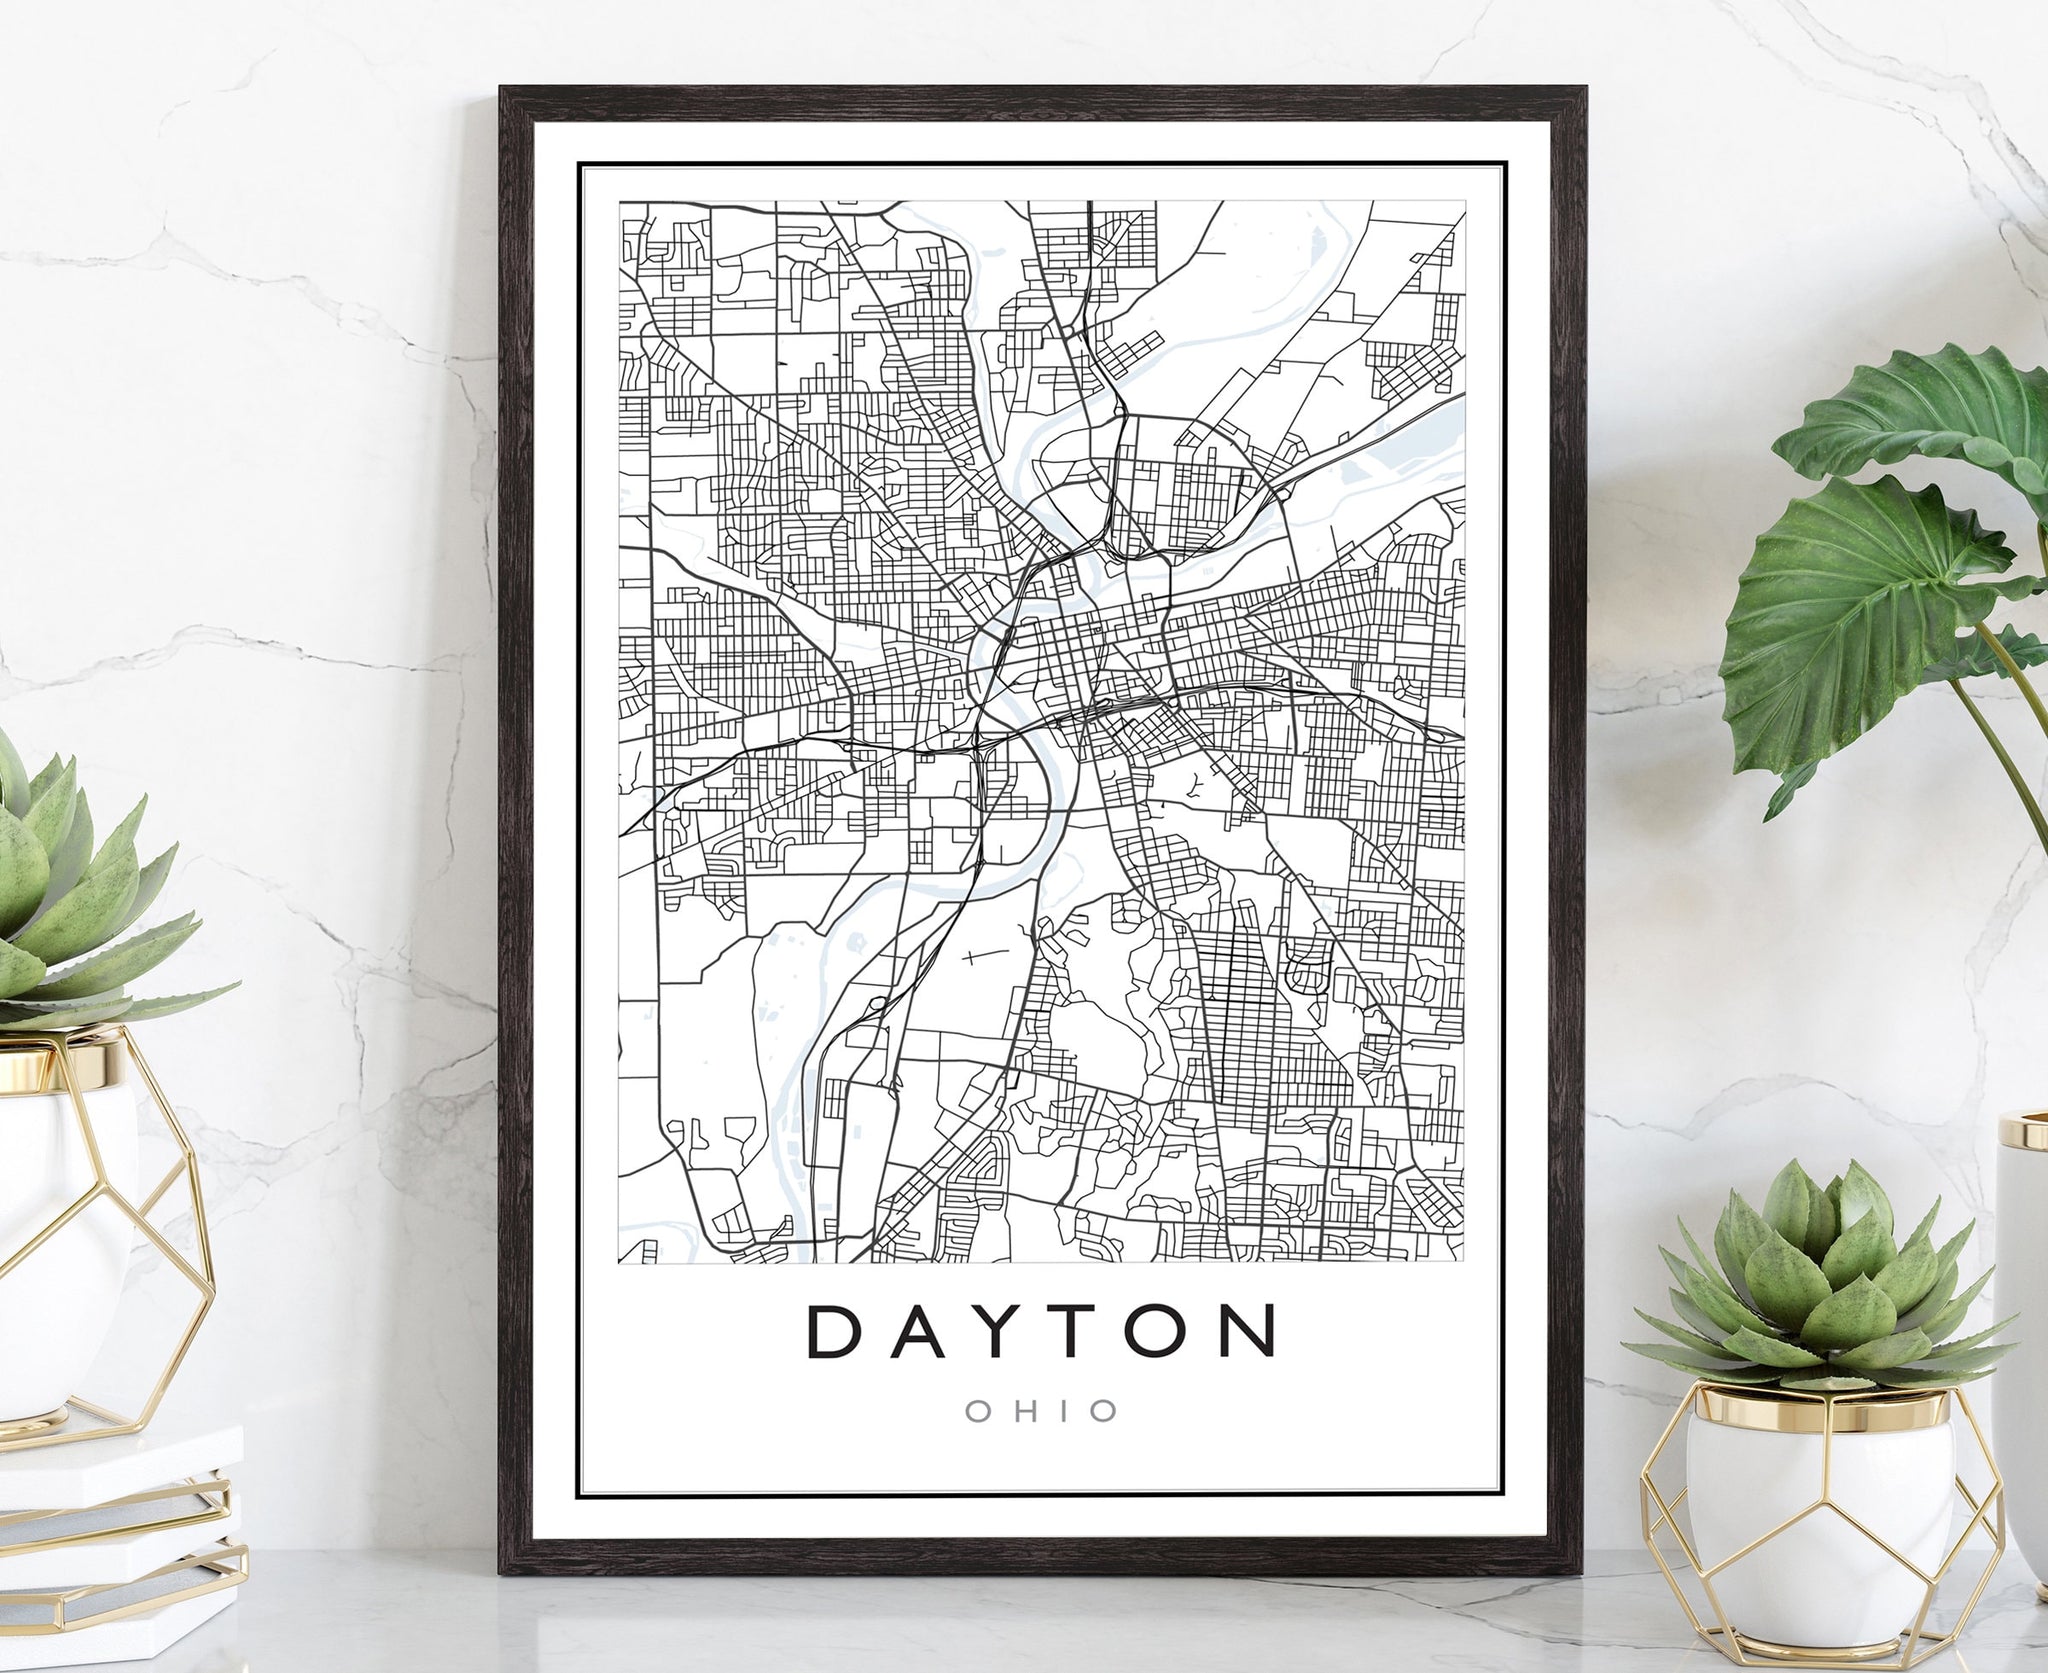 Dayton Ohio City Map, Ohio City Road Map Poster Print, City Street Map Print, Modern US City Map, Home Art Decoration, Office Wall Art Print